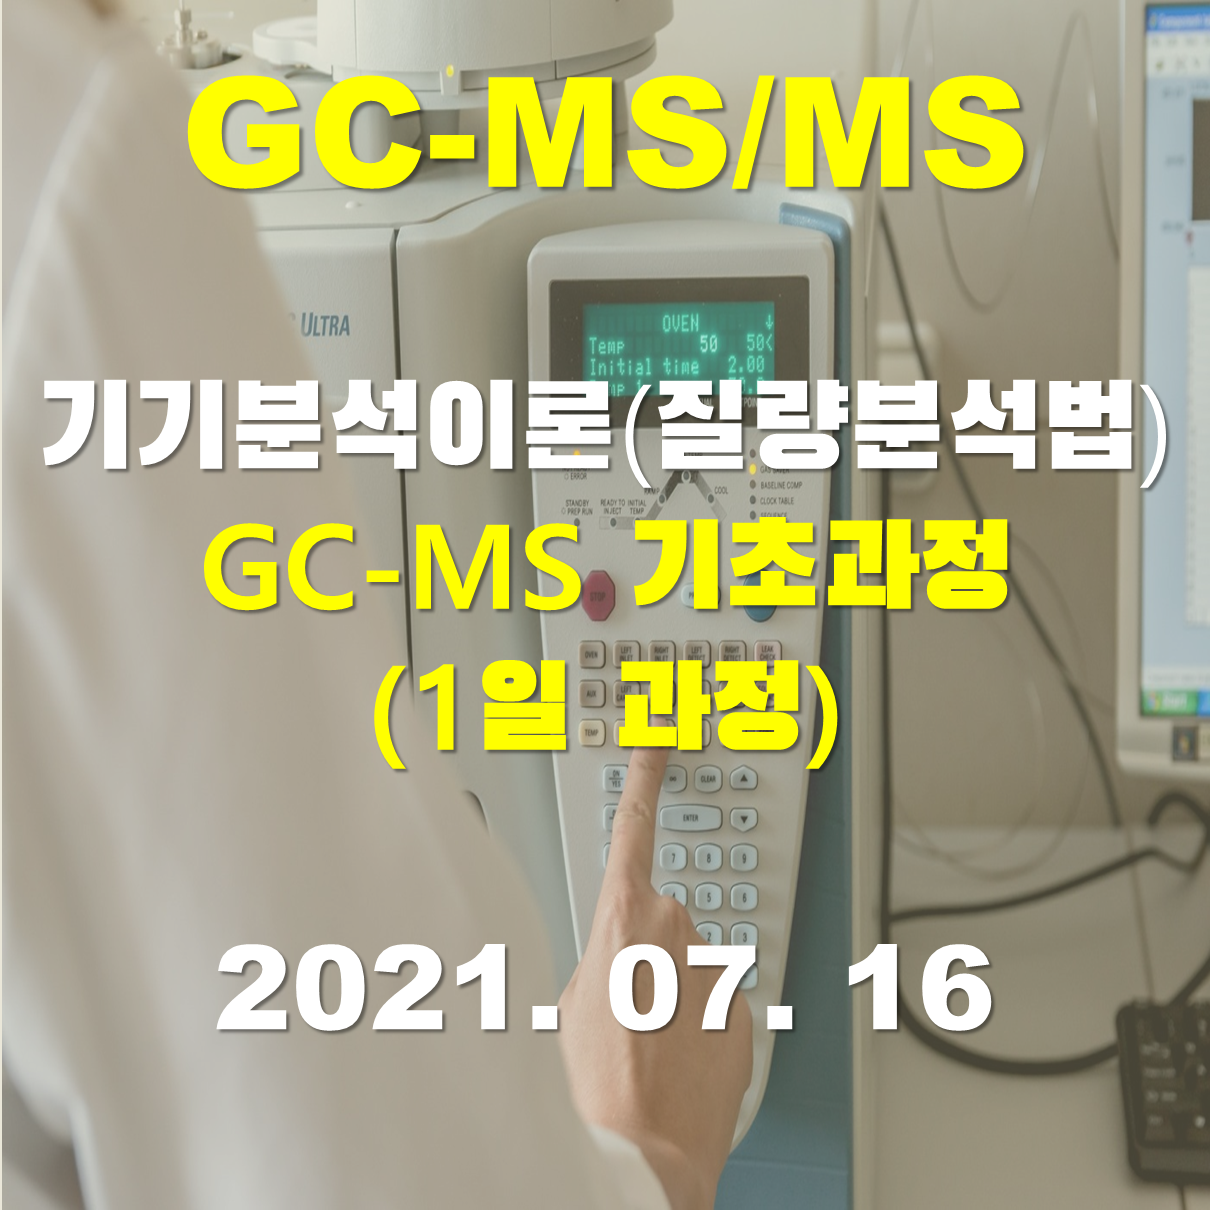 GC-MS/MS 기초과정(1일)